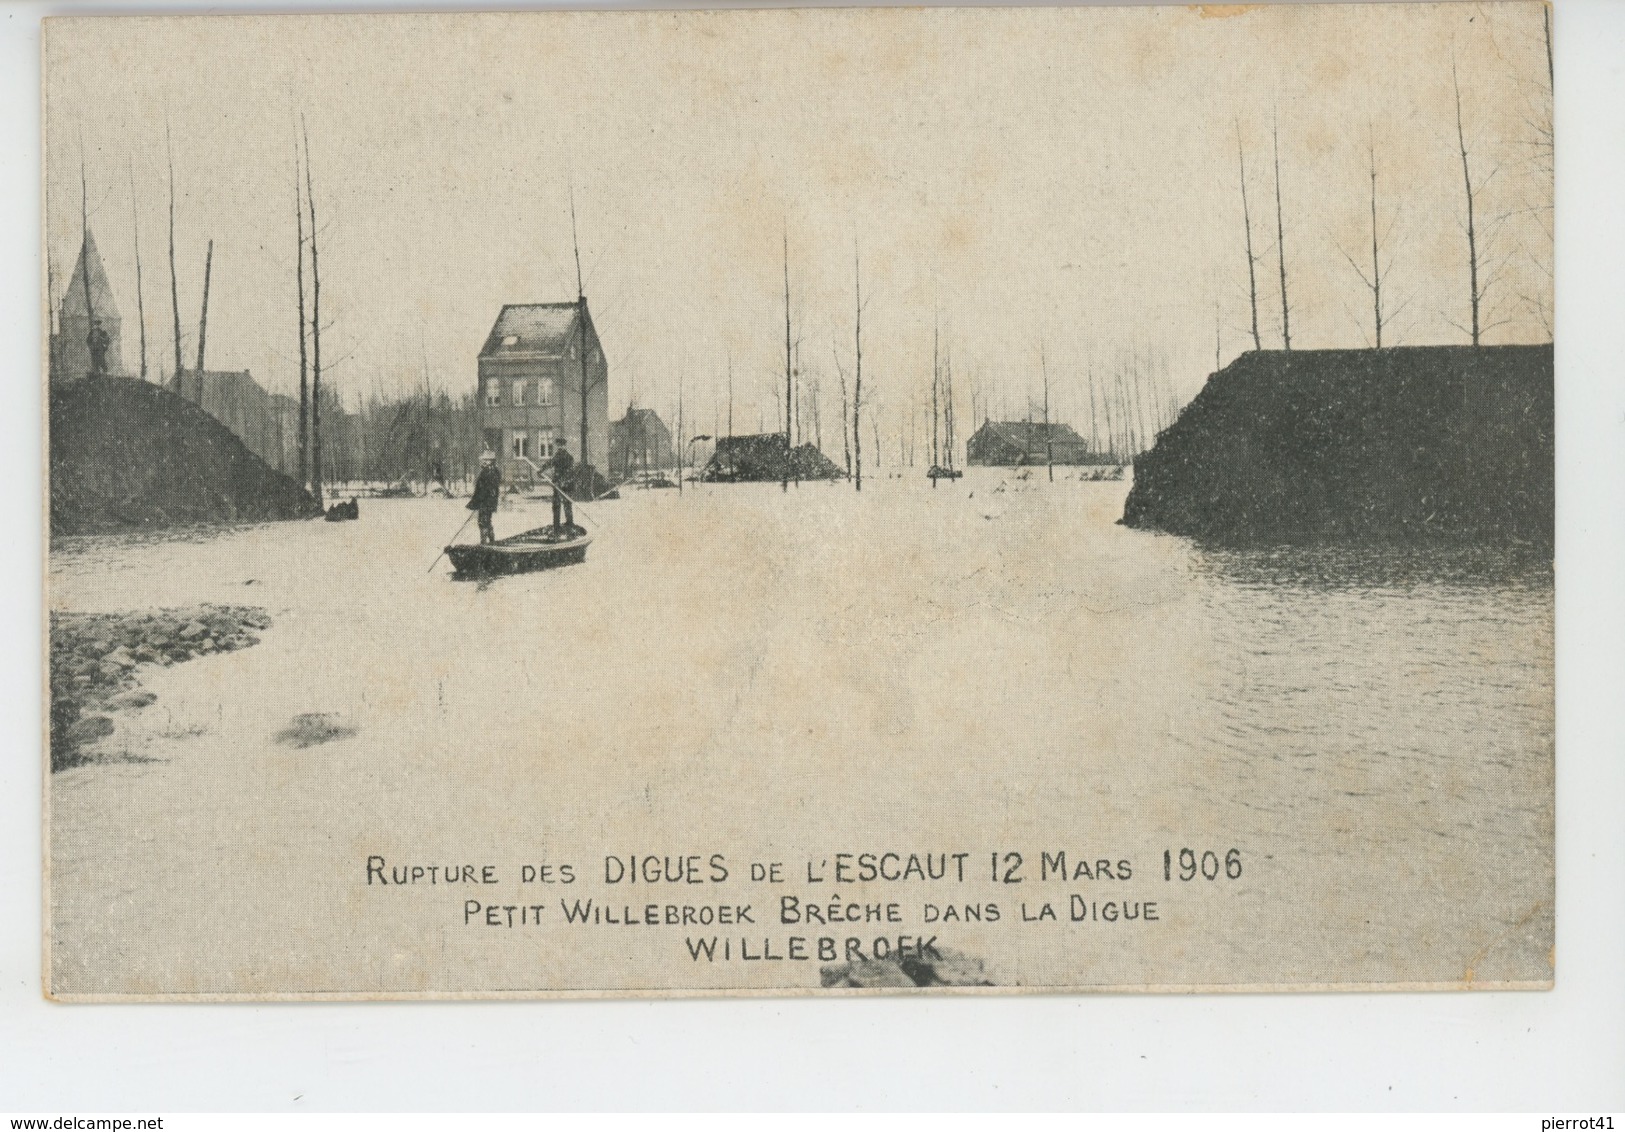 BELGIQUE - ANVERS - Rupture Des Digues De L'Escaut Le 12 Mars 1906 - PETIT WILLEBROEK - Brêche Dans La Digue - Willebroek